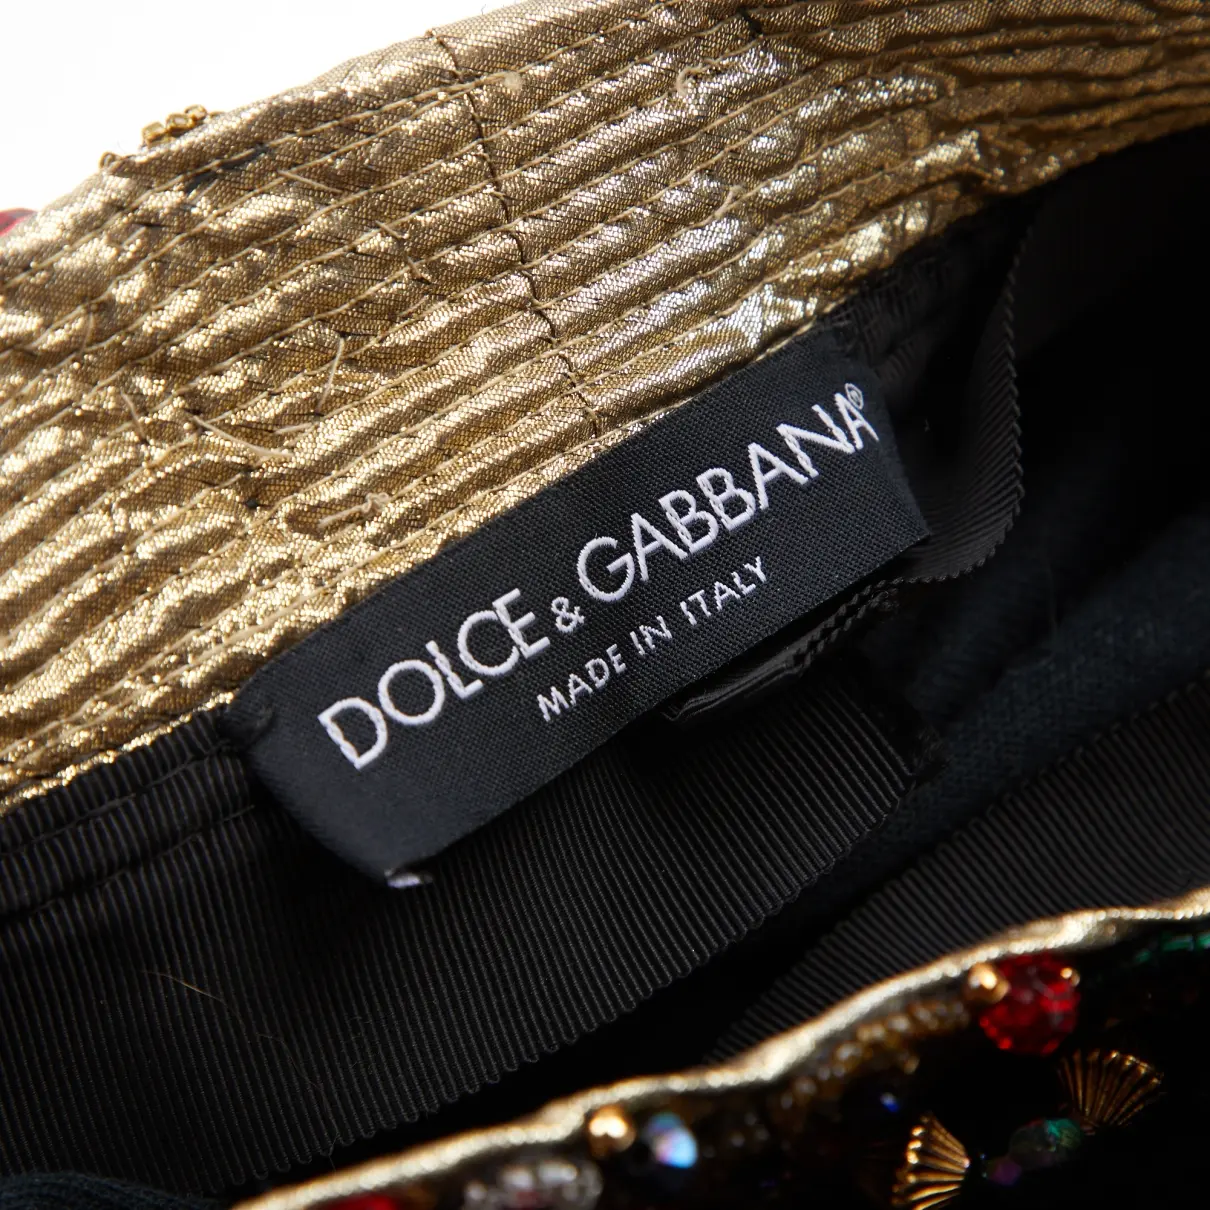 Dolce & Gabbana Mink hat for sale